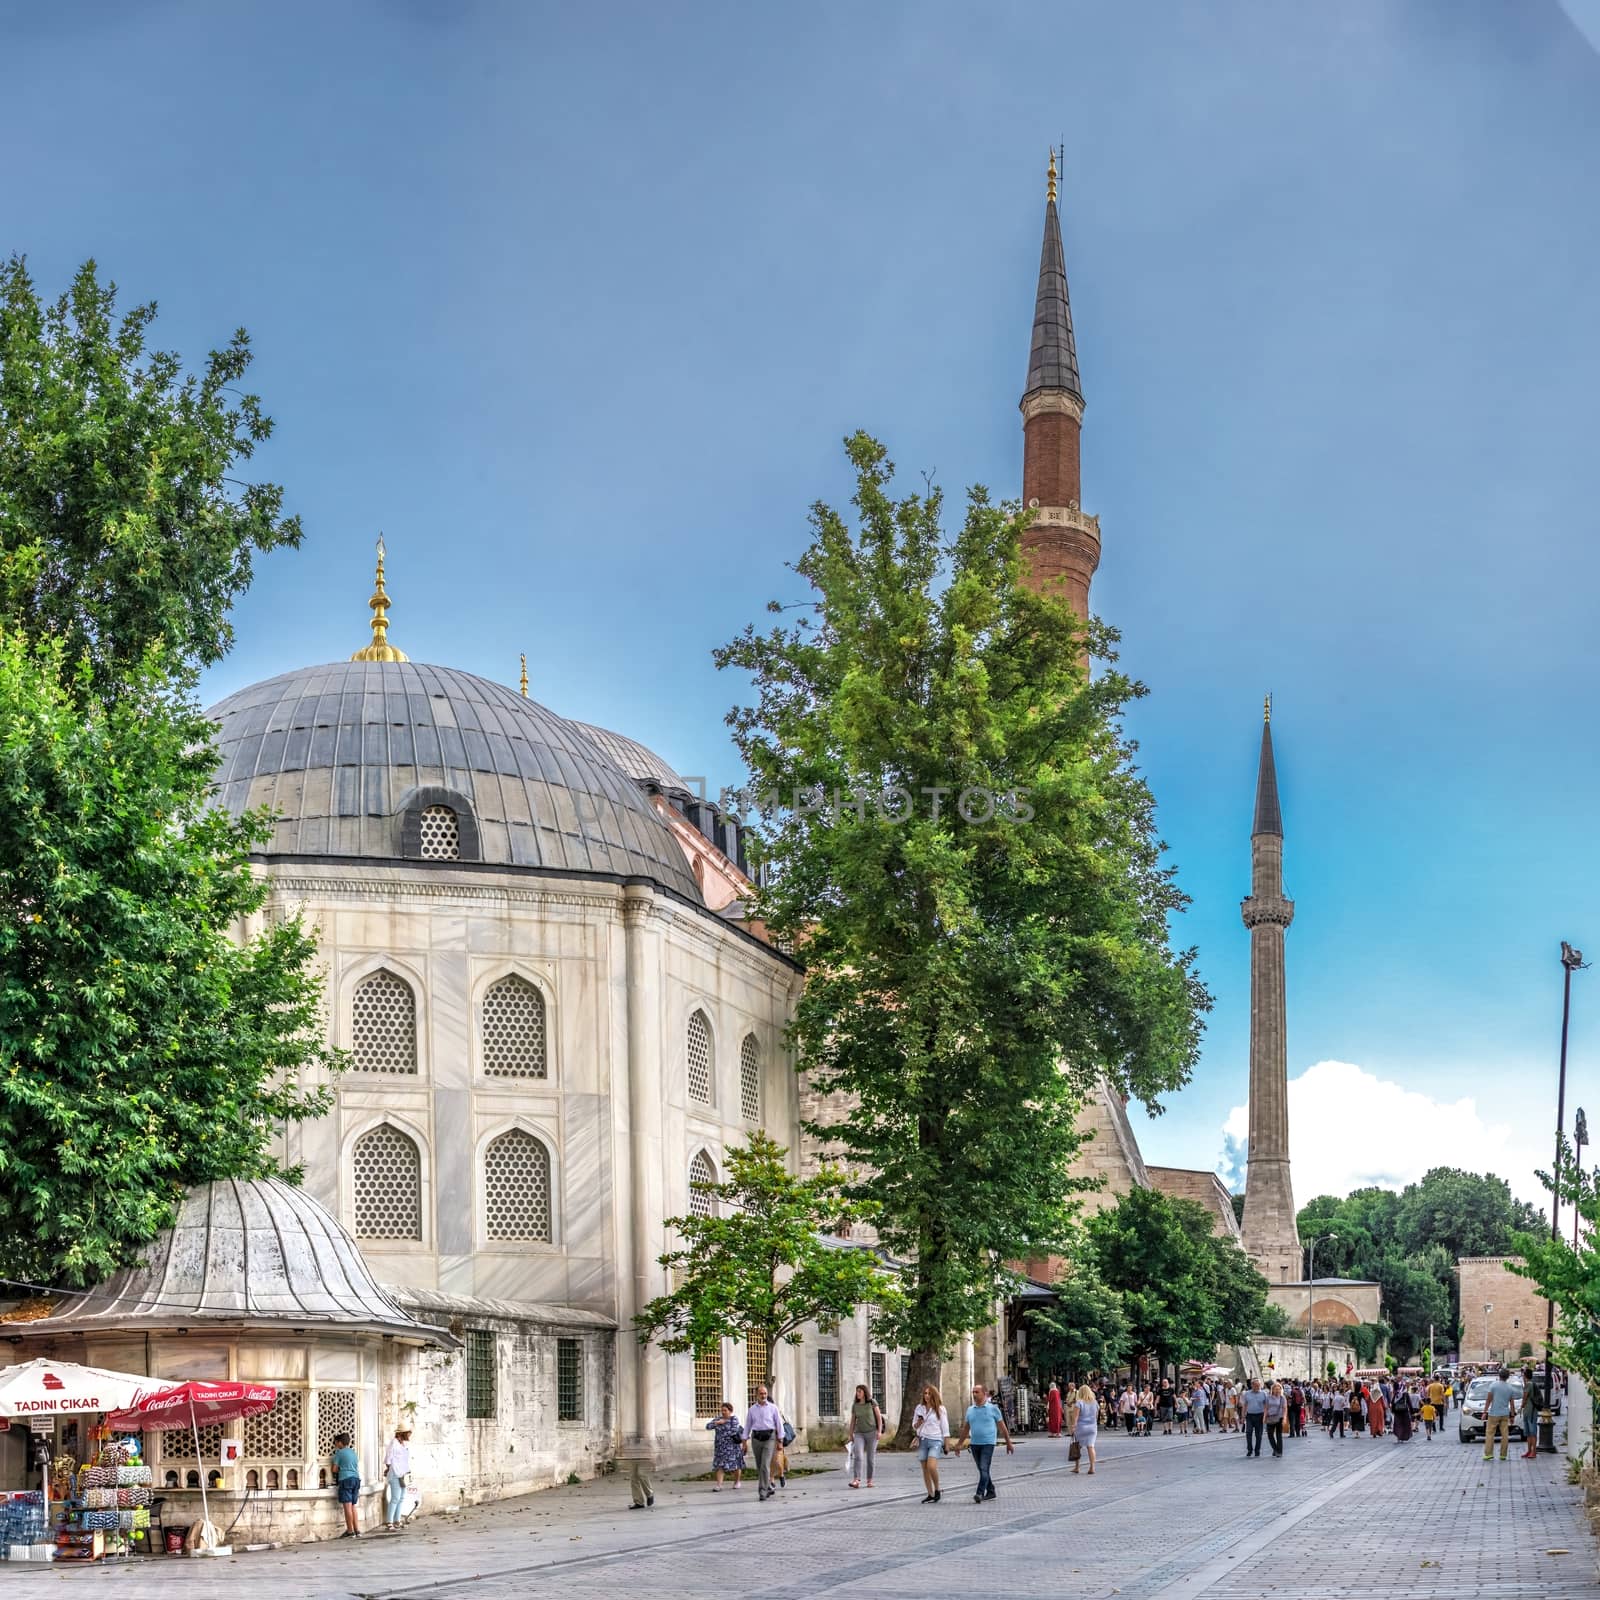 Hagia Sophia museum in Istanbul, Turkey by Multipedia